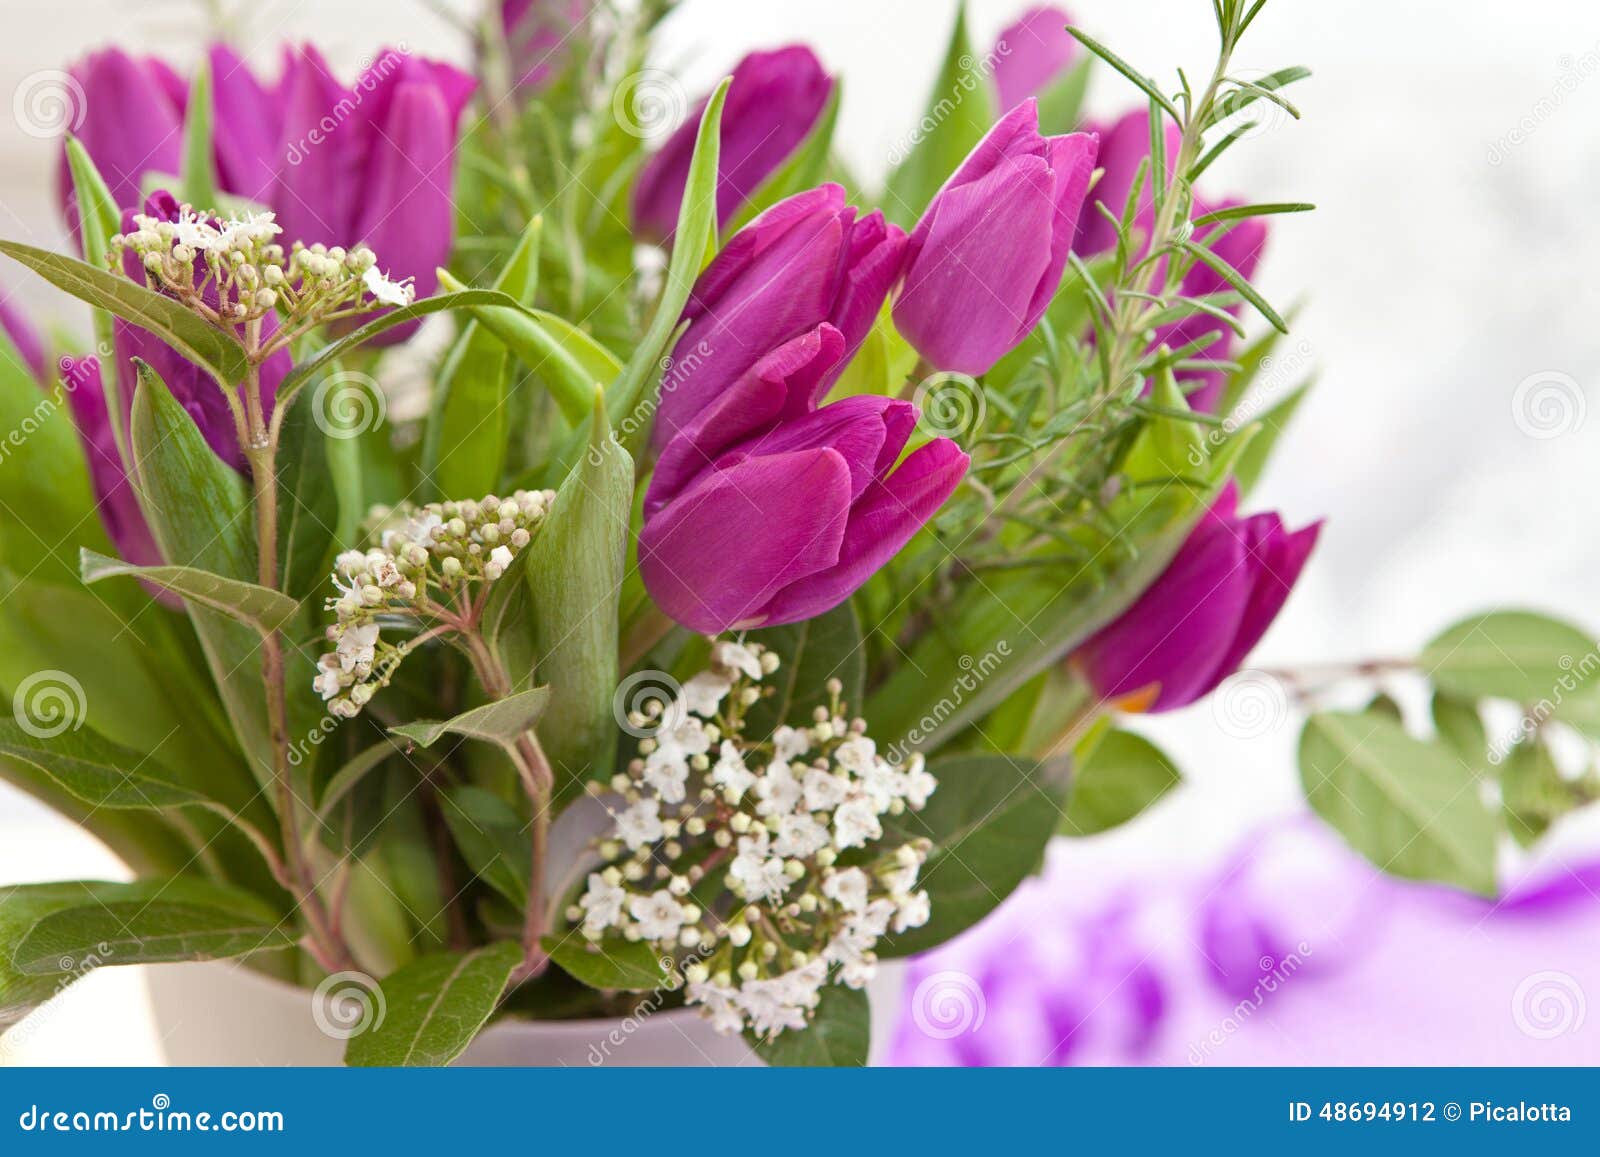 Fresh purple tulips stock photo. Image of ribbon, flowers - 48694912